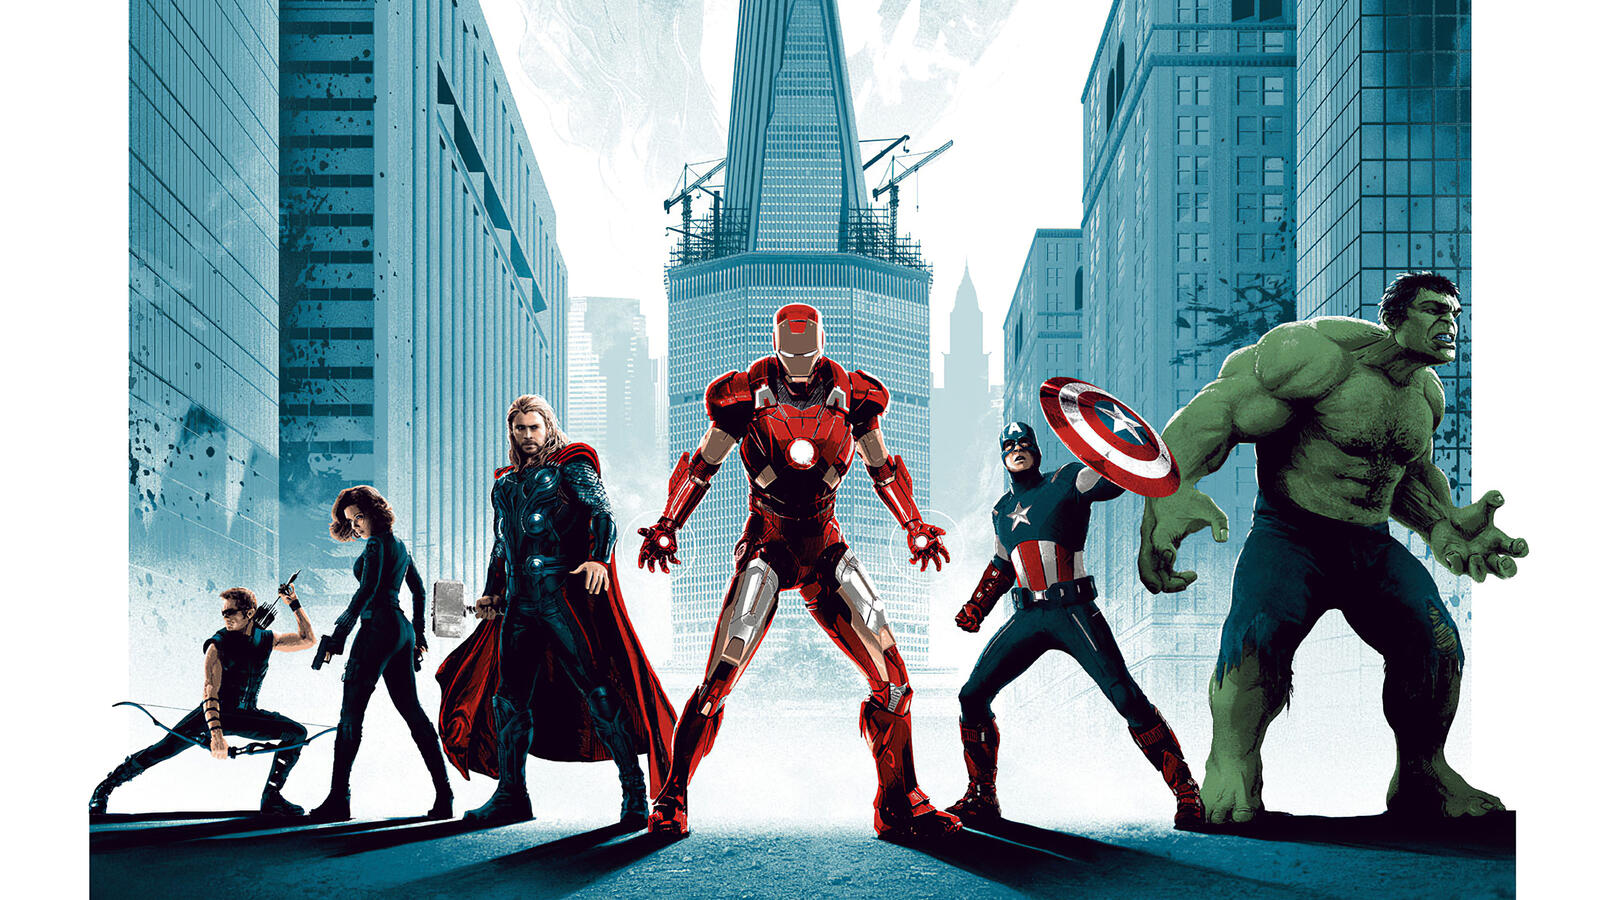 Wallpapers superheroes Avengers movies on the desktop